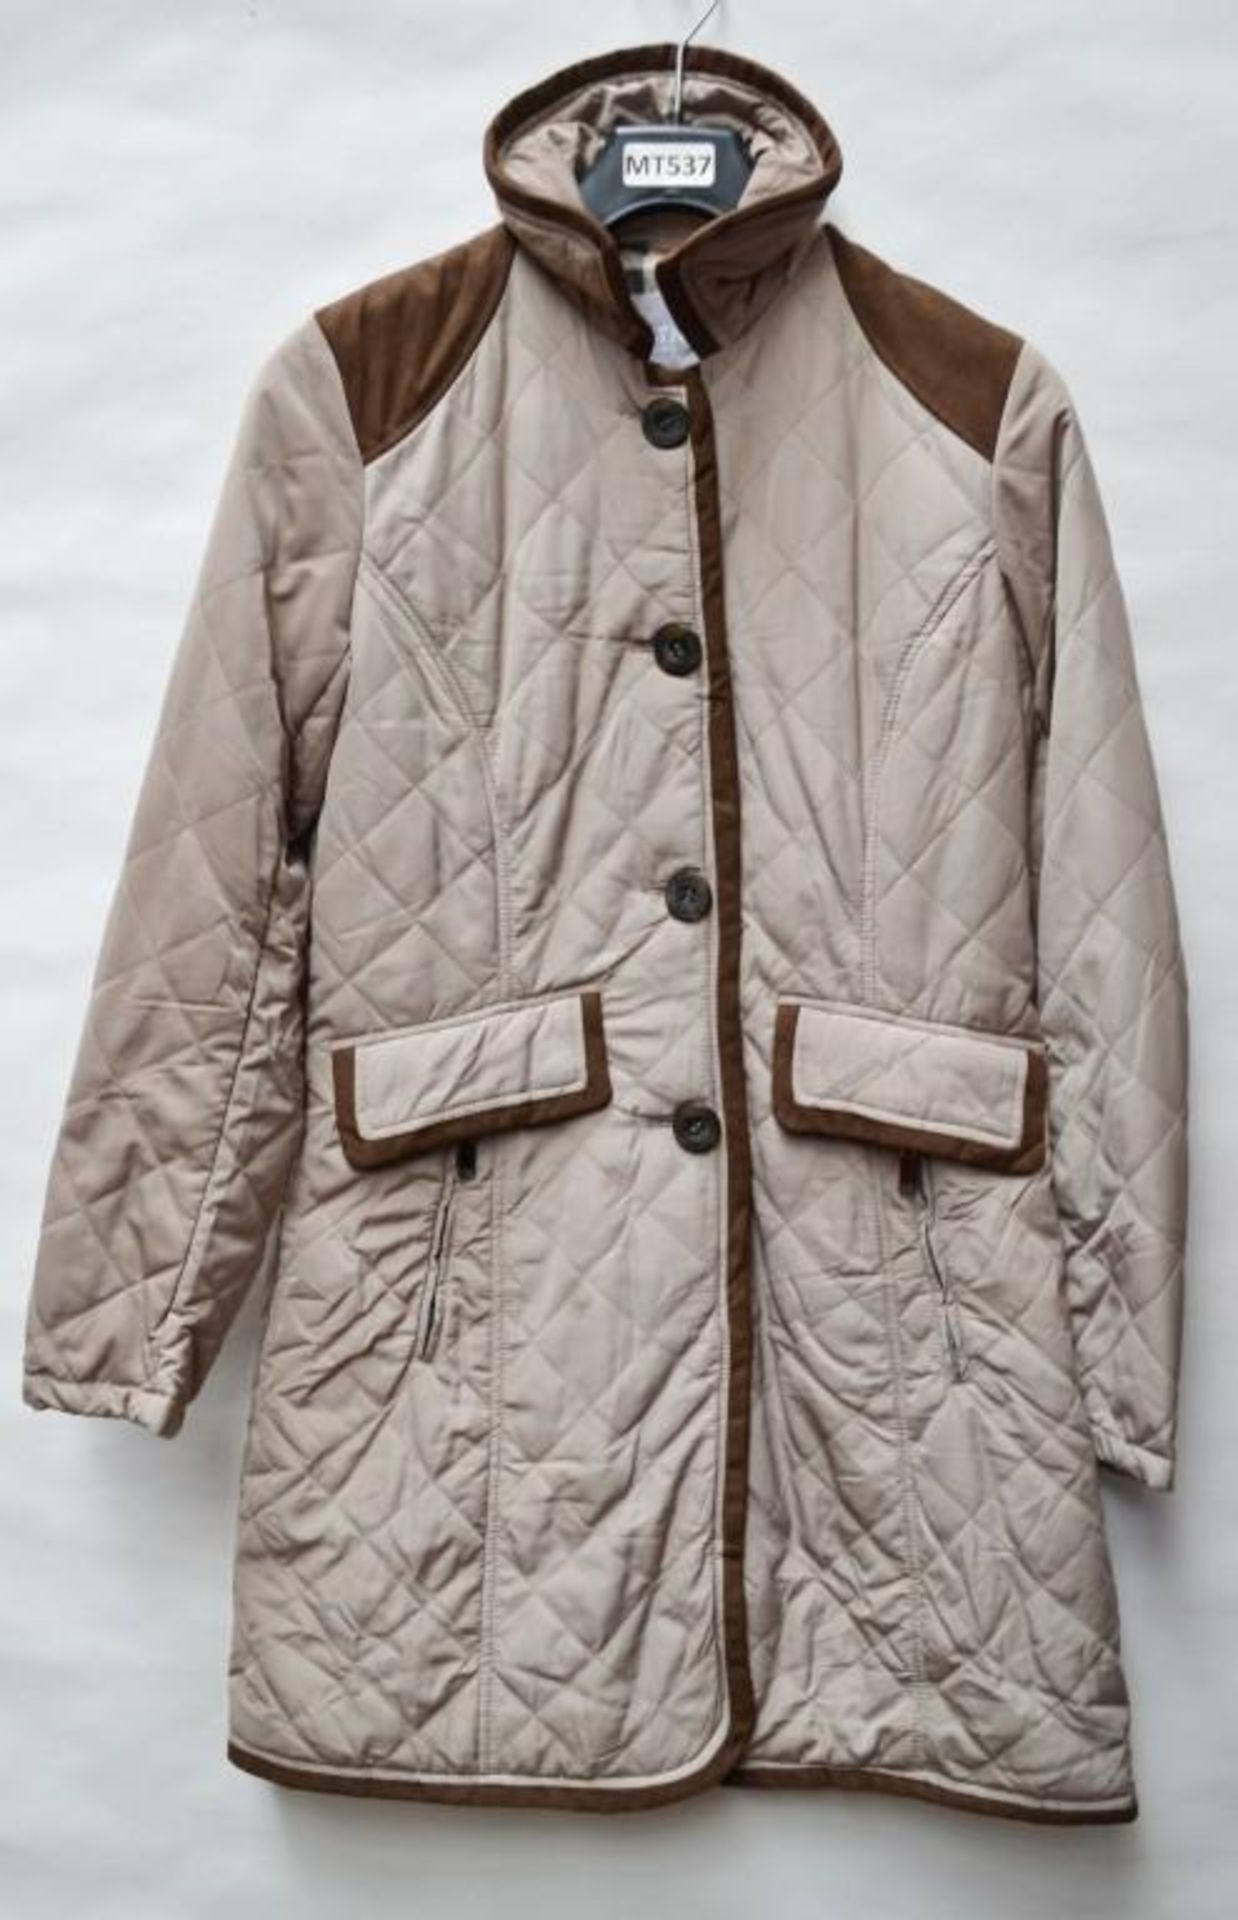 1 x Steilmann KSTN By Kirsten Womens Quilted Winter Coat In Beige & Brown - UK Size 12 - New Sample - Image 3 of 4